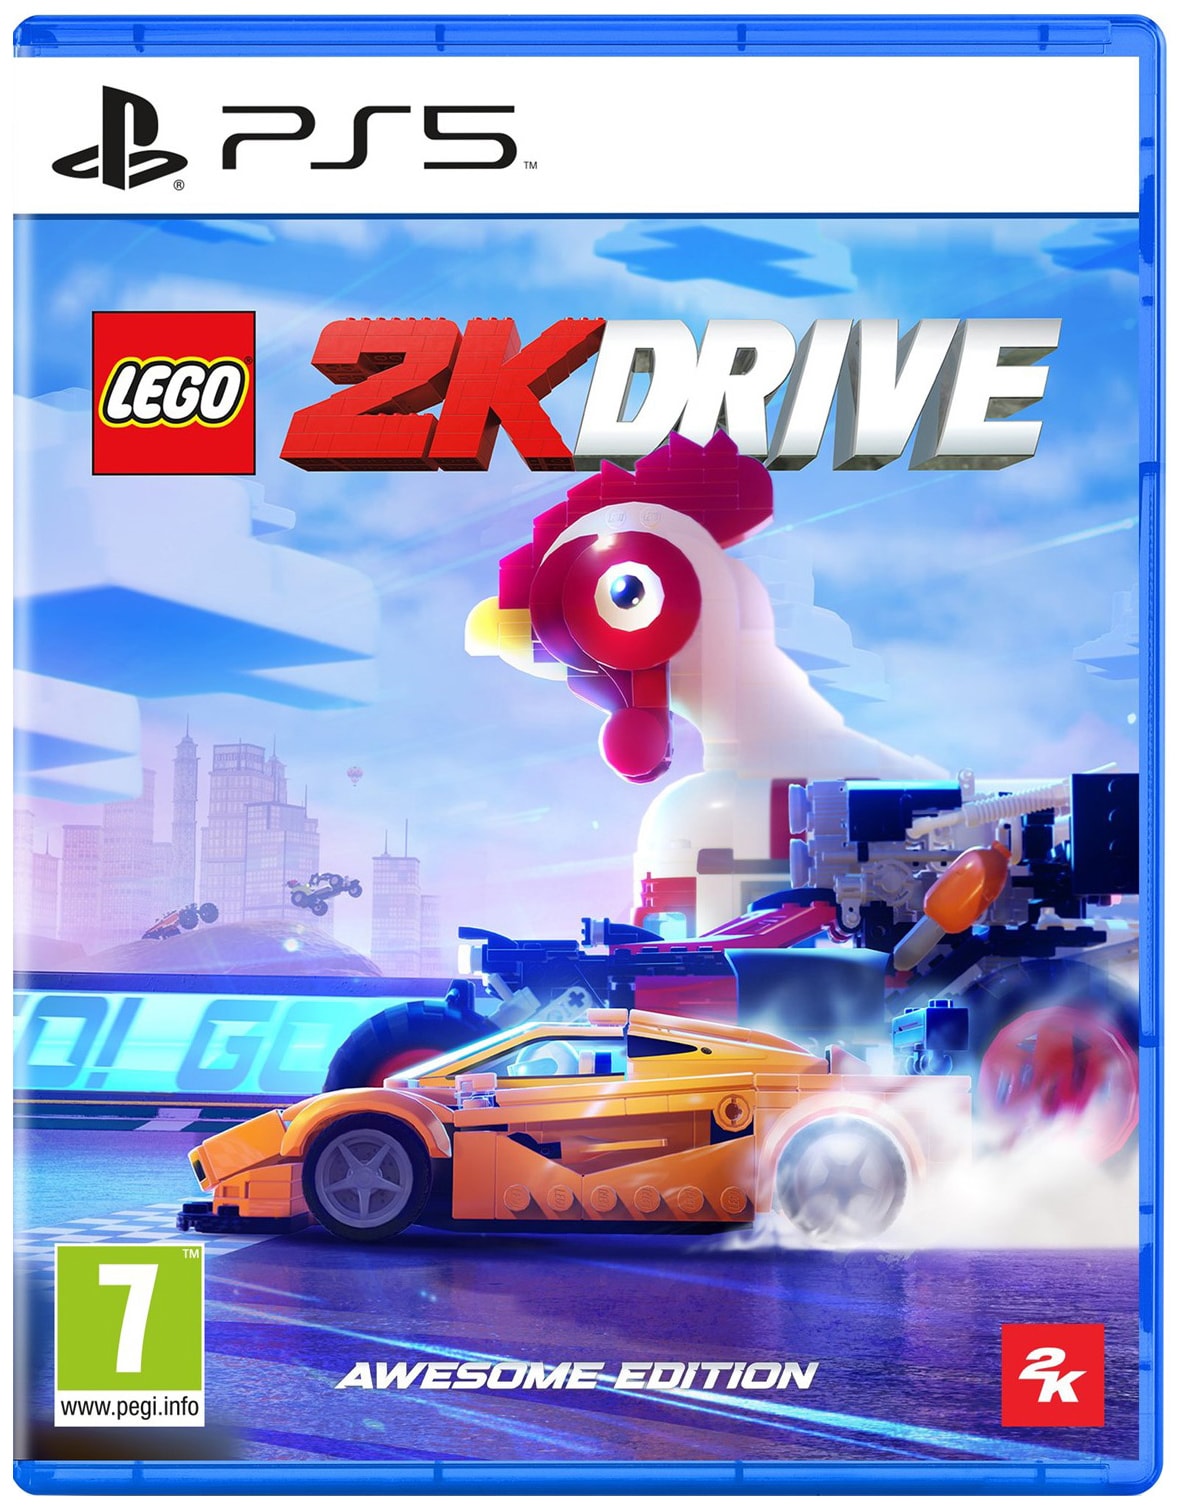 LEGO 2K Drive - Awesome Edition (PS5) - Gigantti verkkokauppa